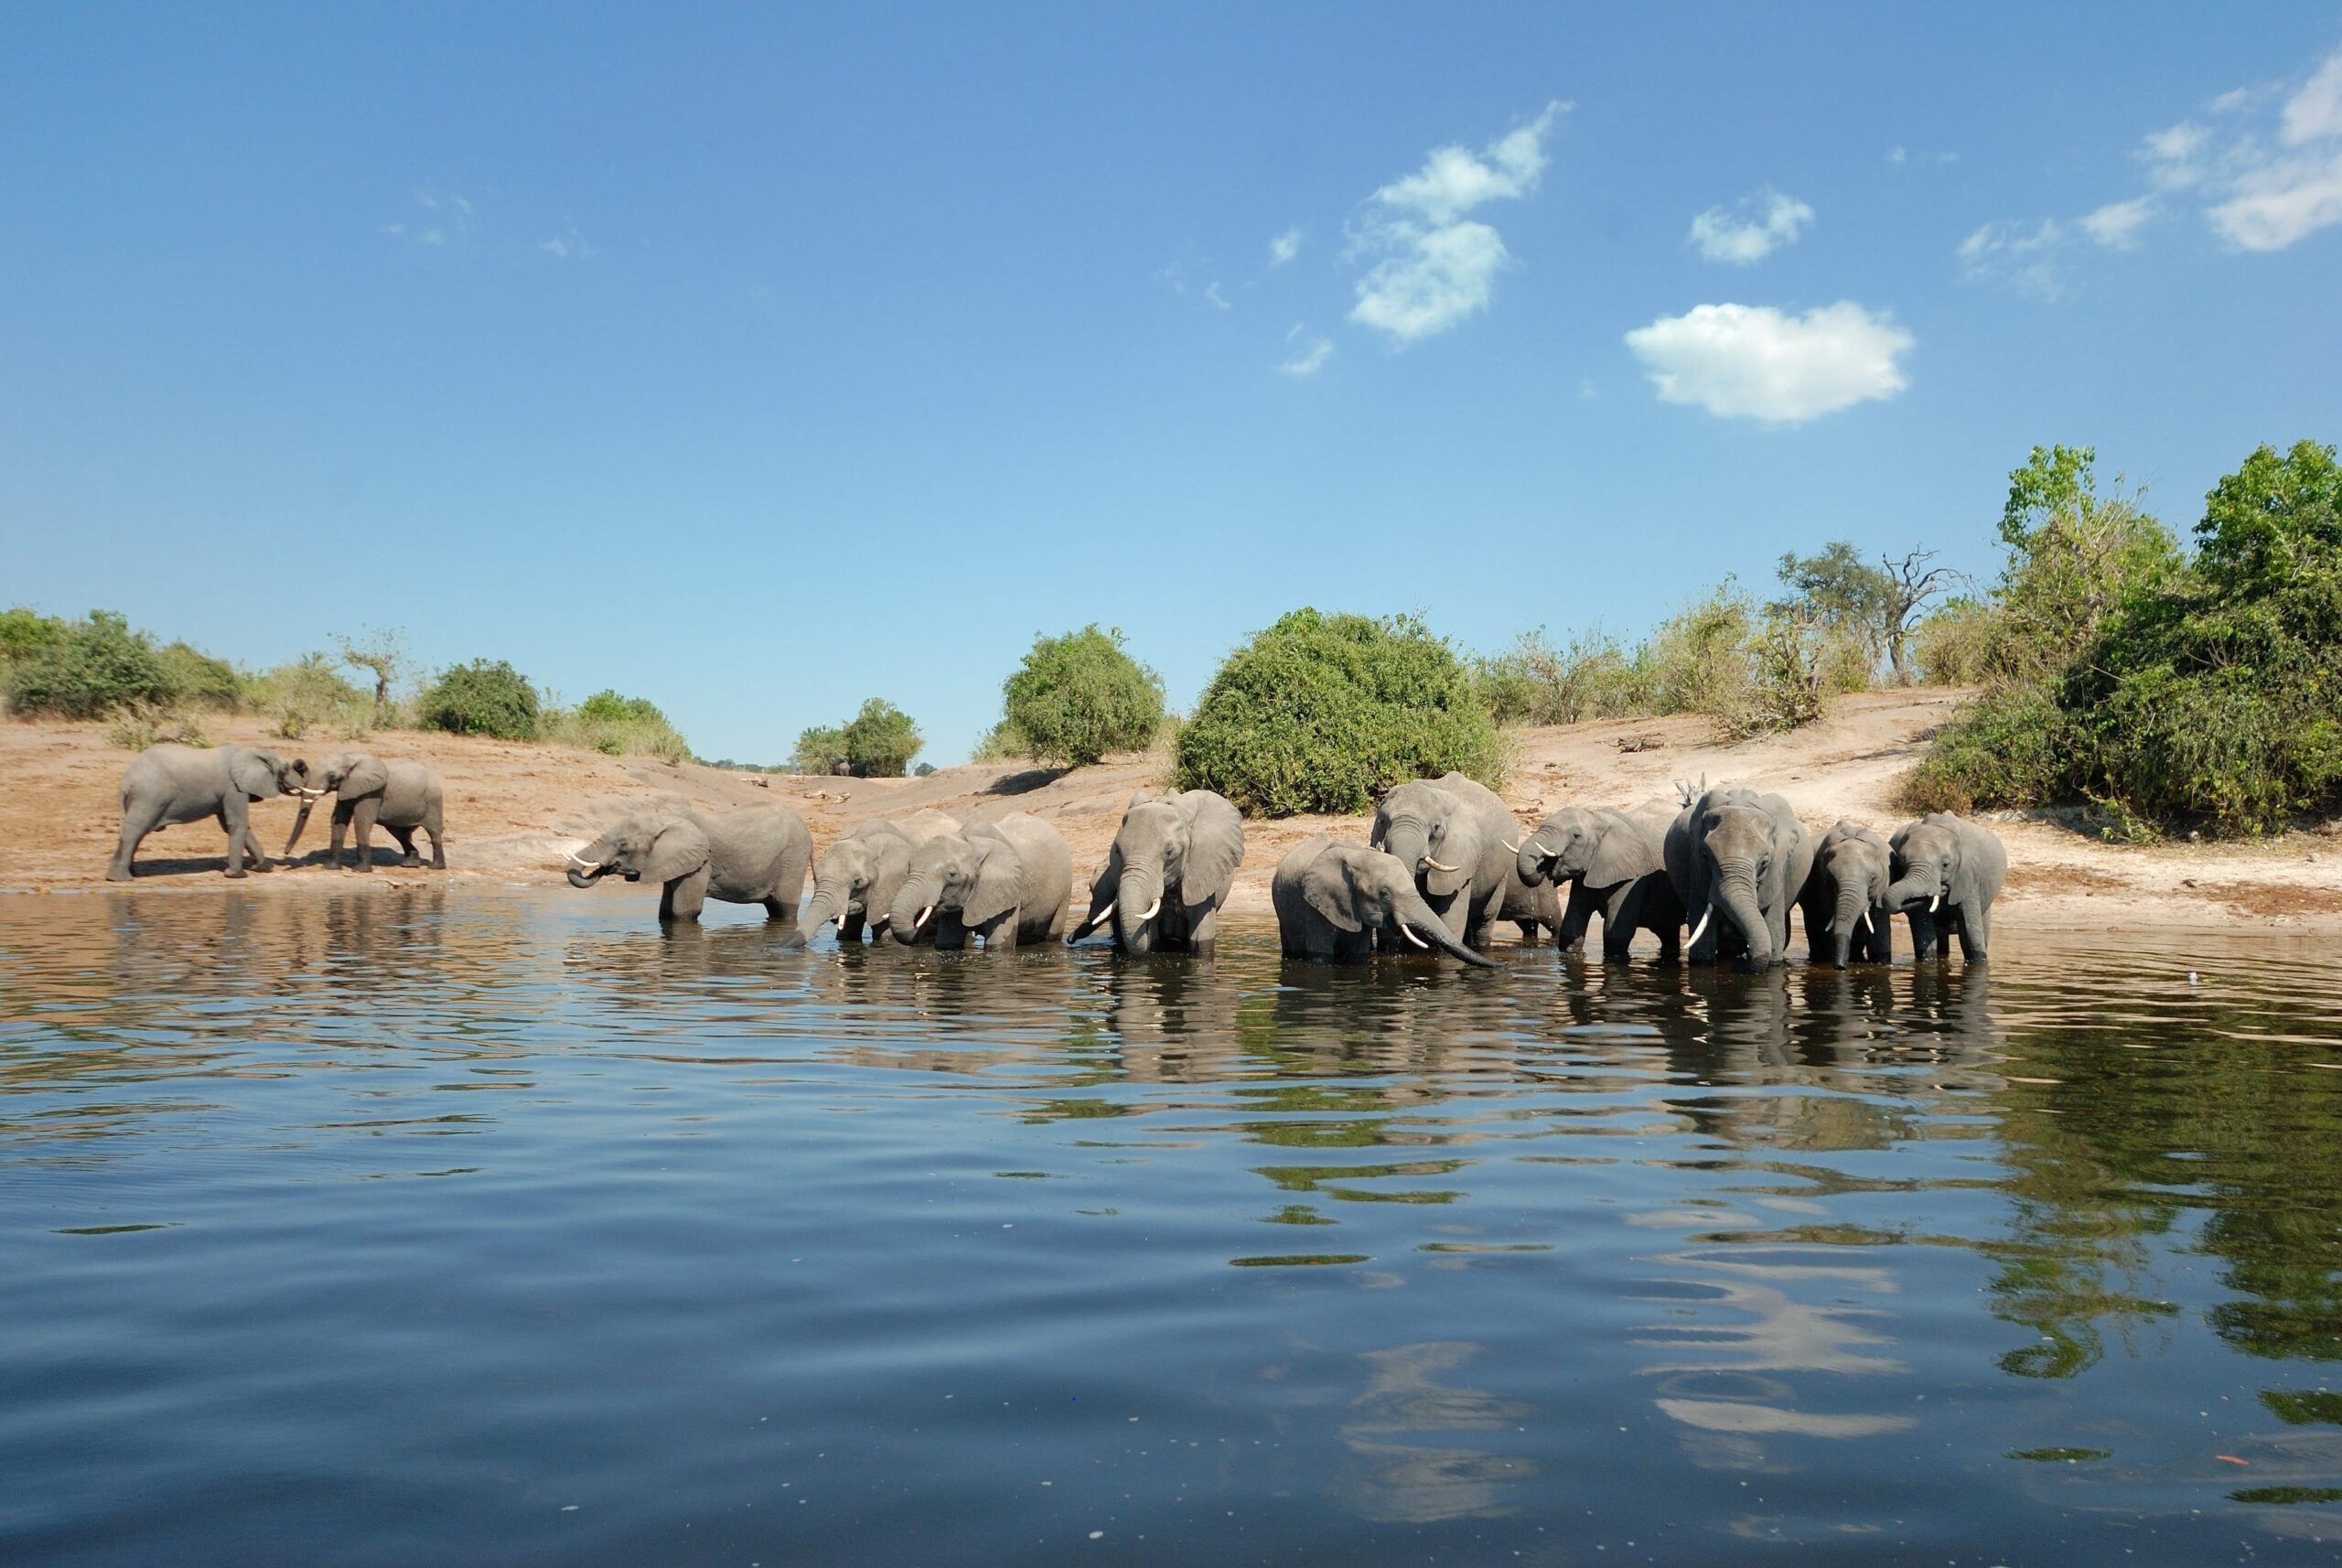 A herd of elephants drinking in the Chobe river in Botswana